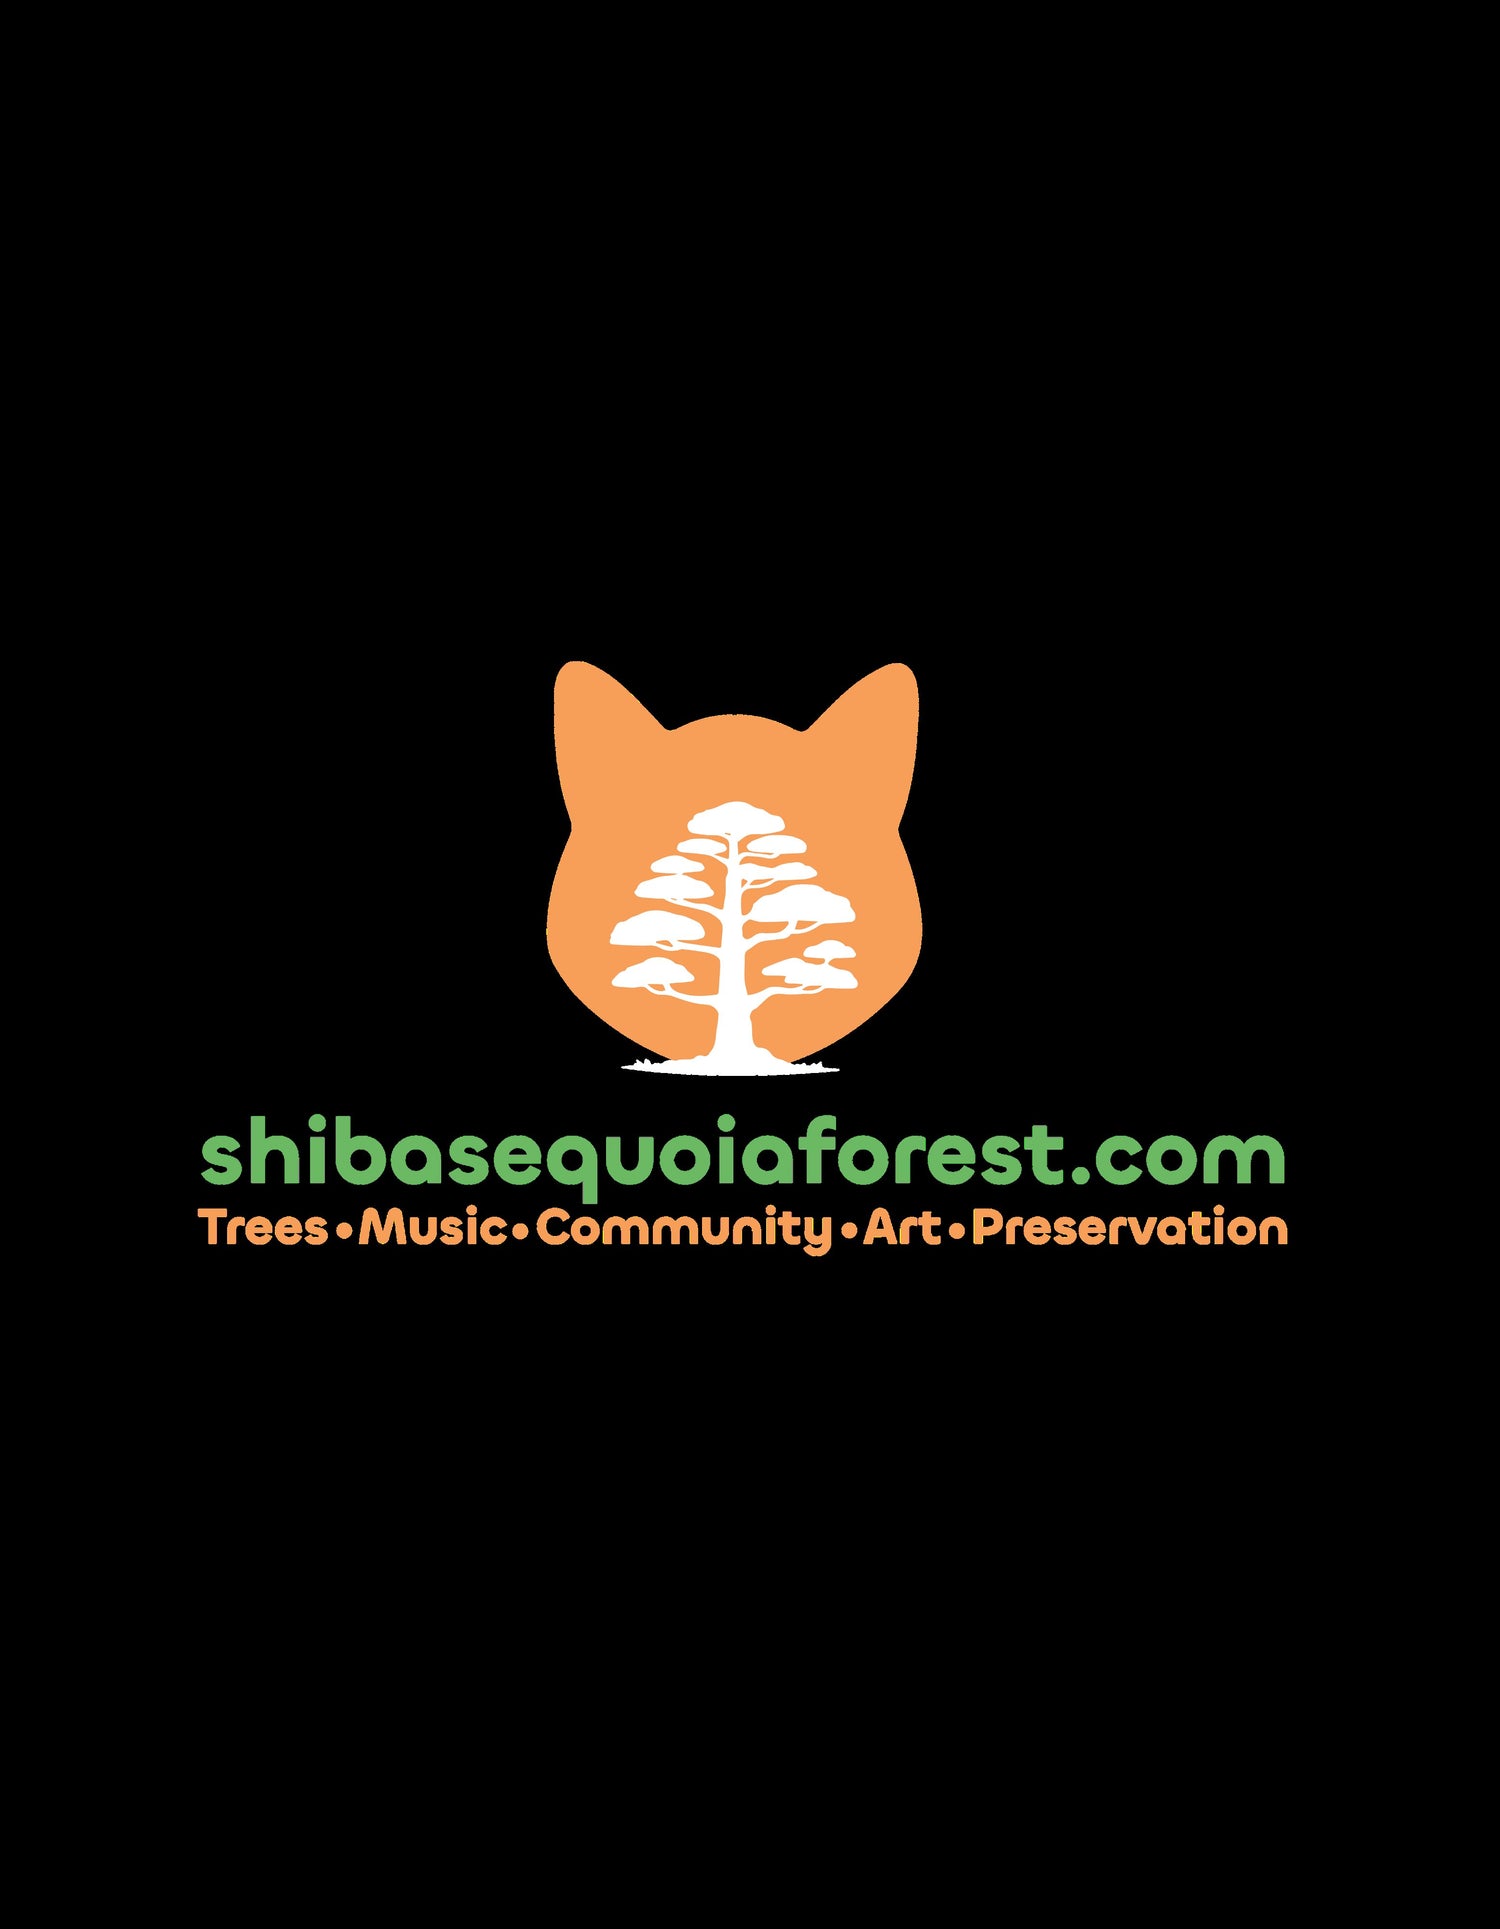 Shiba Sequoia Forest